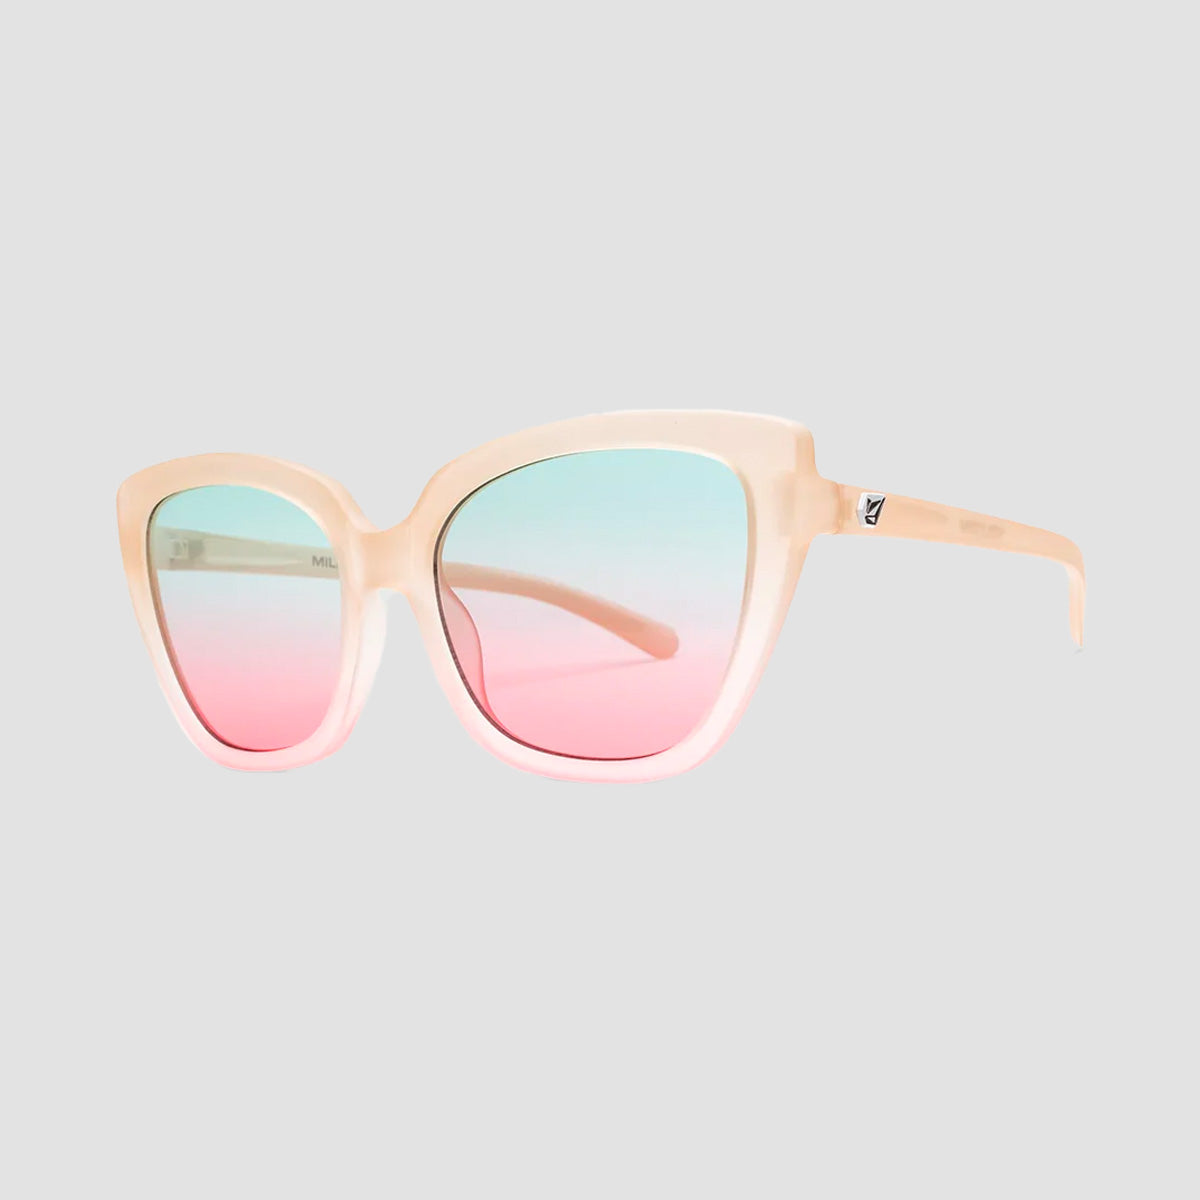 Volcom Milli Sunglasses So Faded/Aqua Gradient - Womens